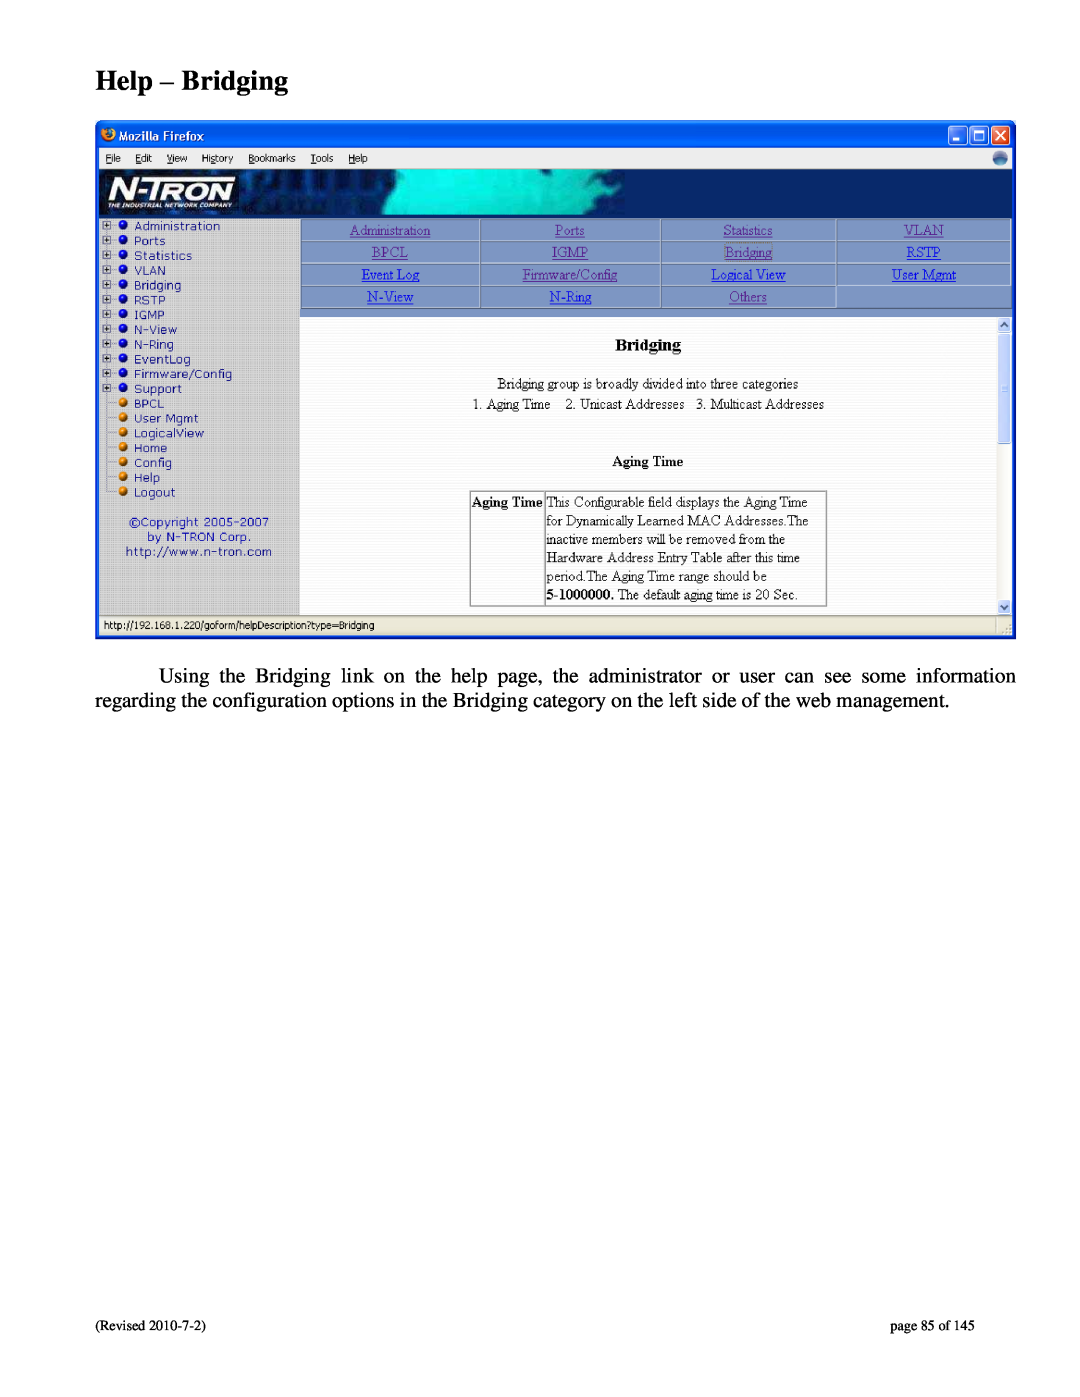 N-Tron 9000 user manual Help - Bridging, page 85 of 